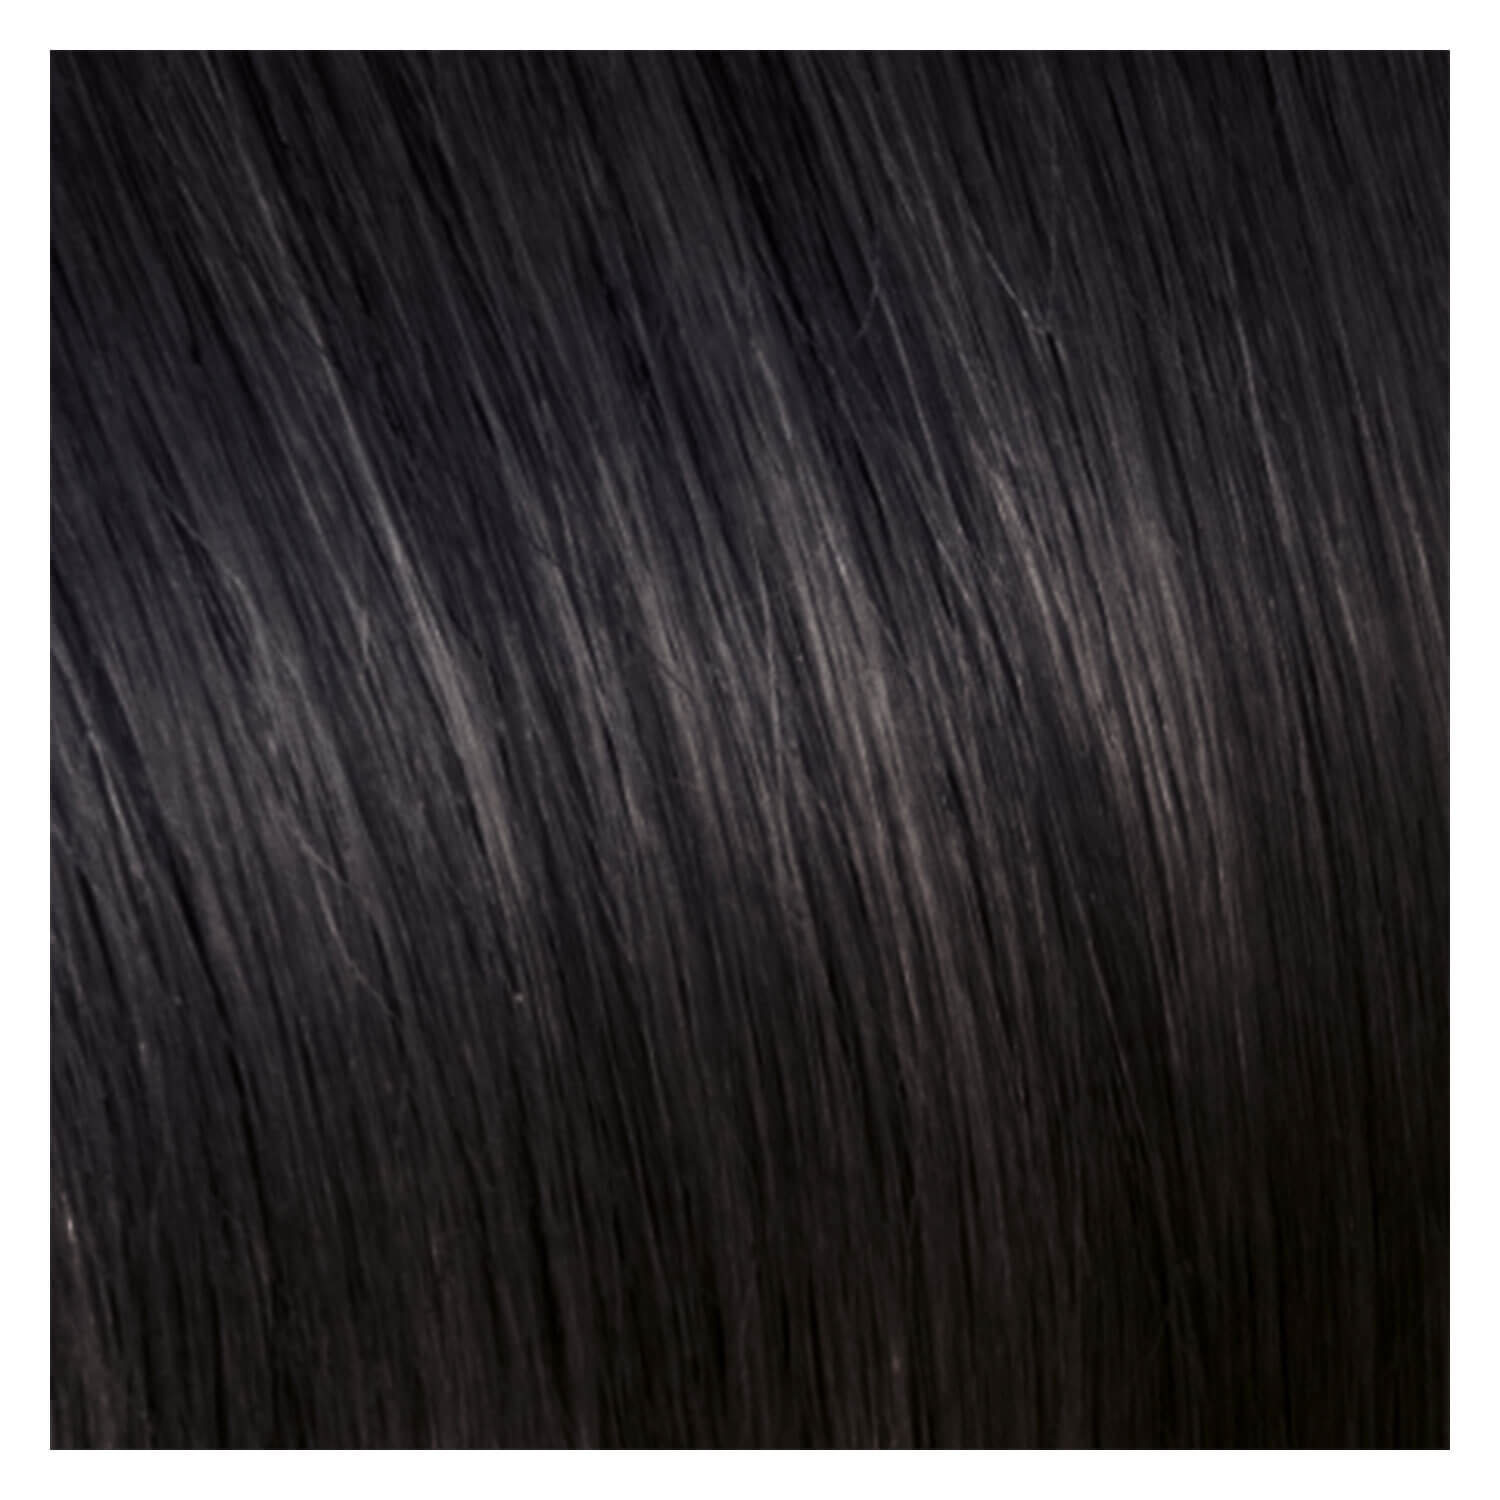 Produktbild von SHE Bonding-System Hair Extensions Straight - 1B Schwarz 55/60cm